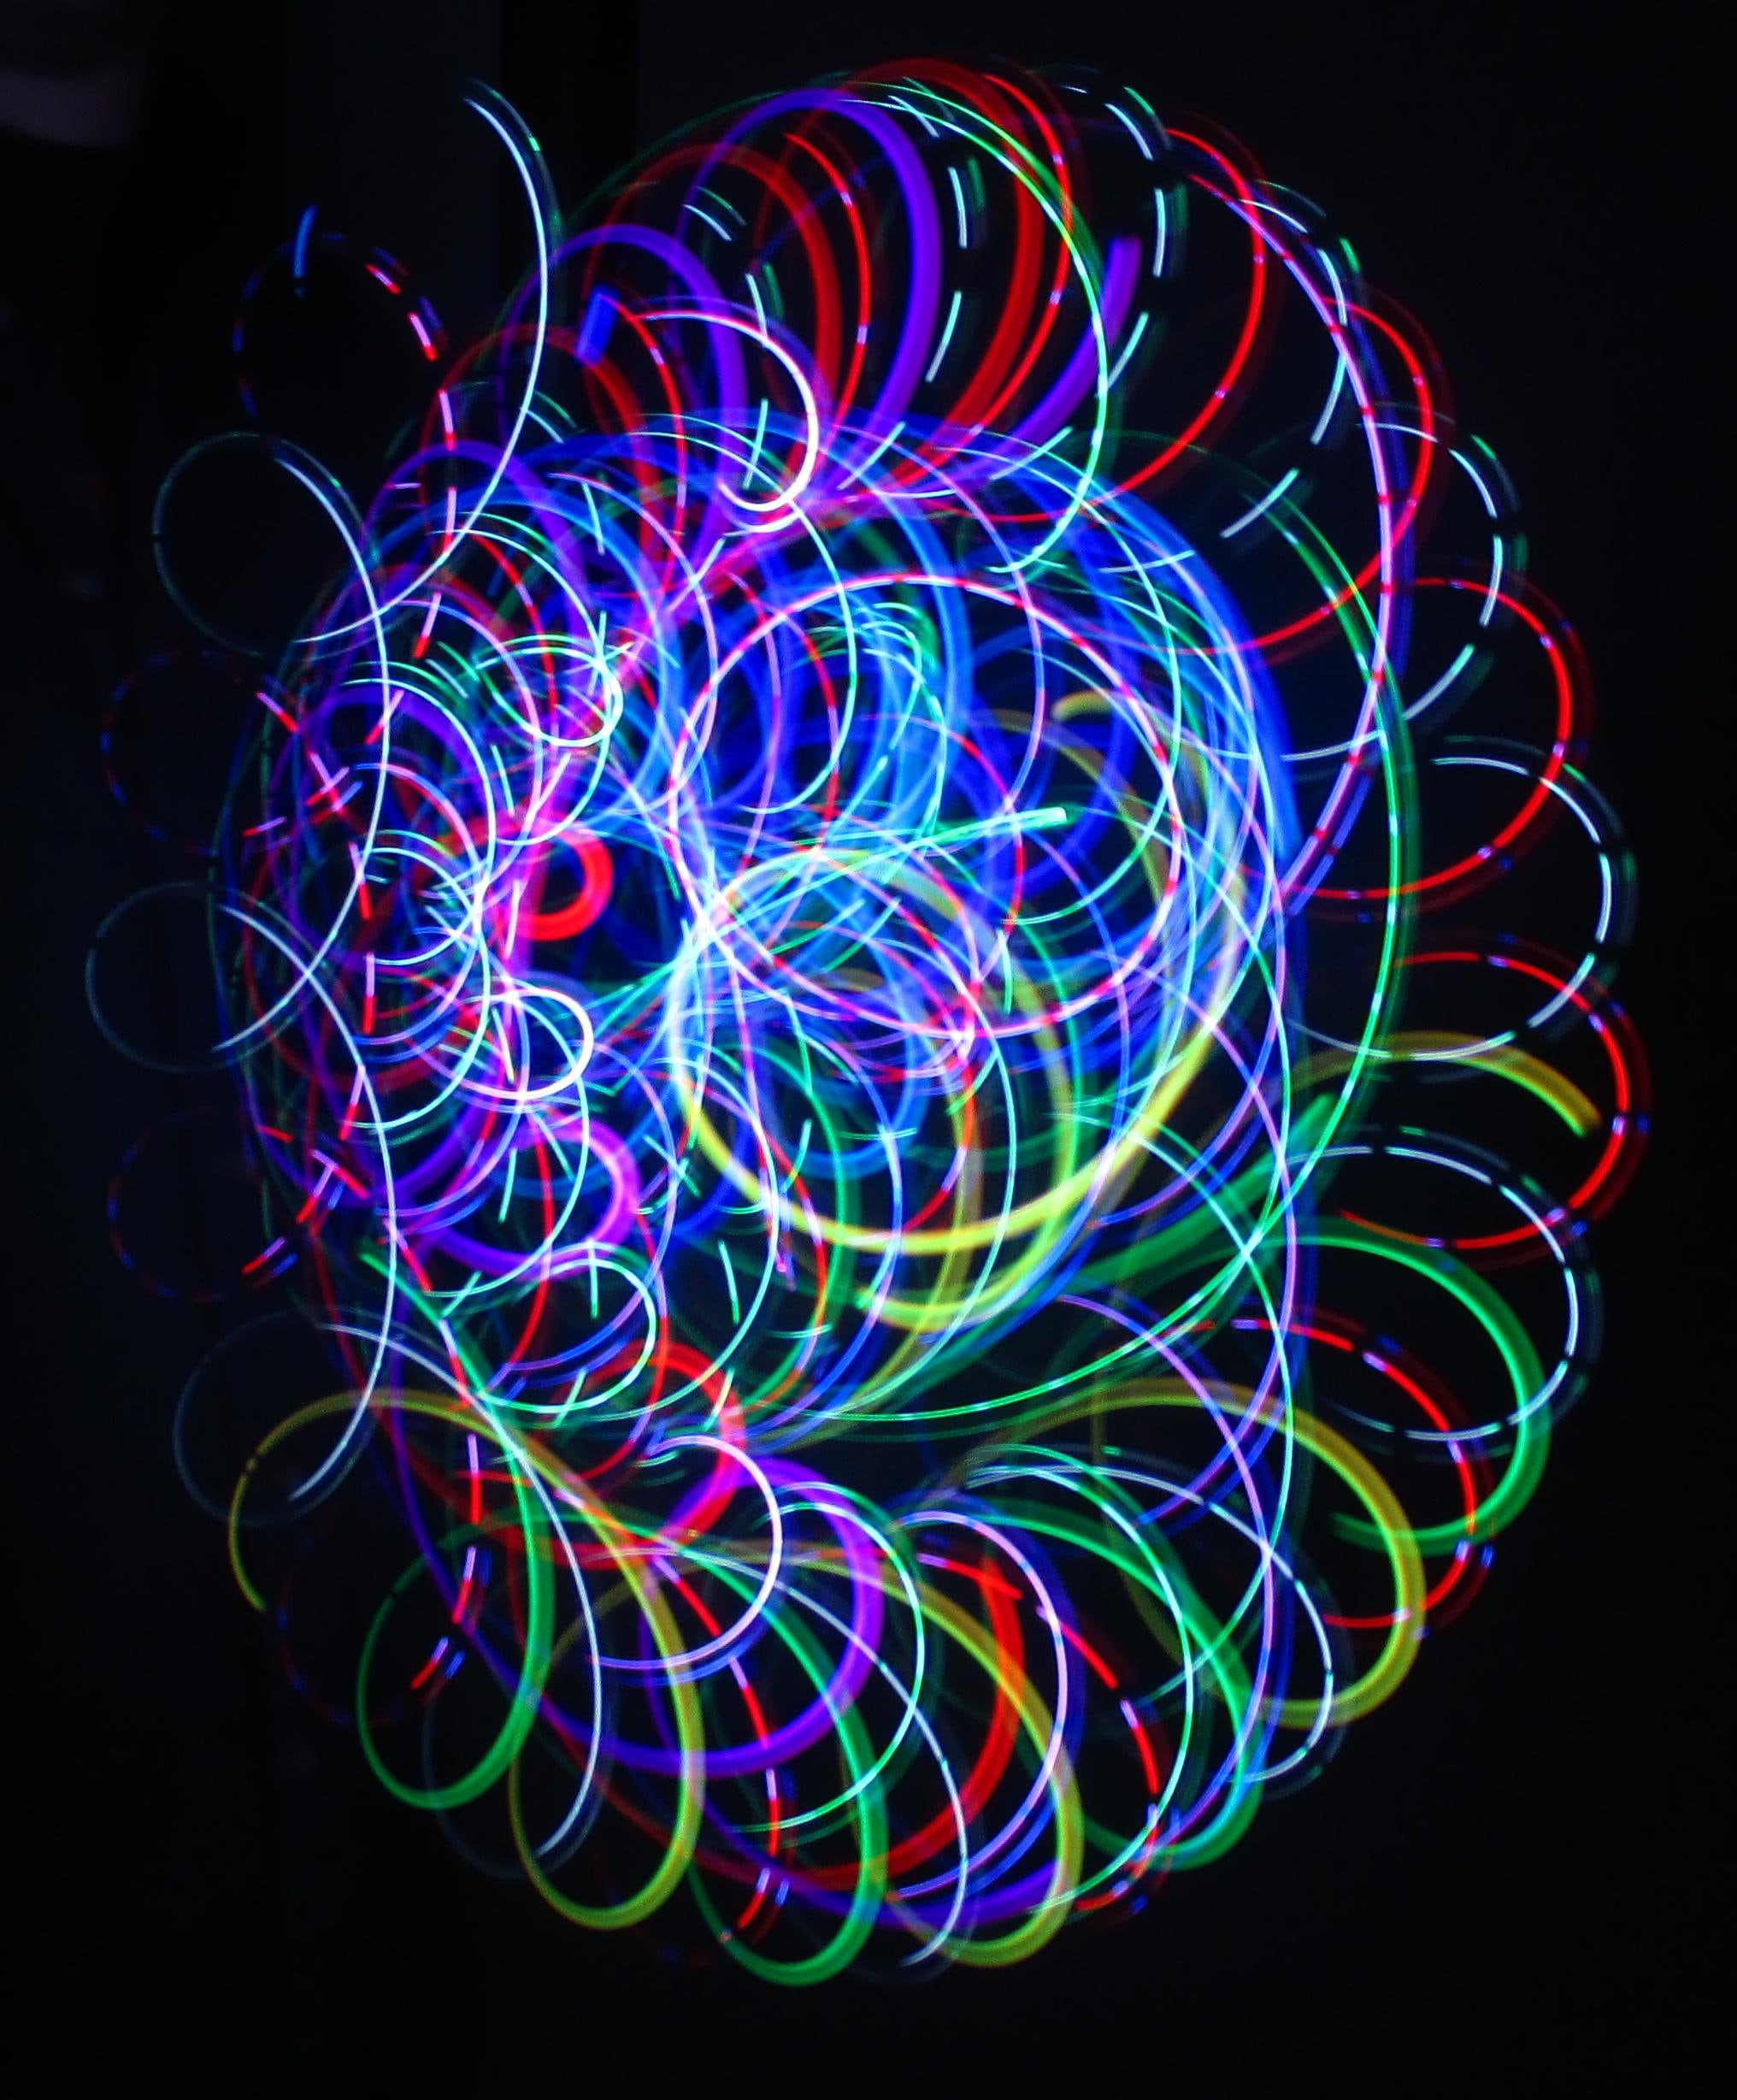 Órbita GloFX 6-Led Rave giro de arco iris luz Juguete Orbital Lightshow 